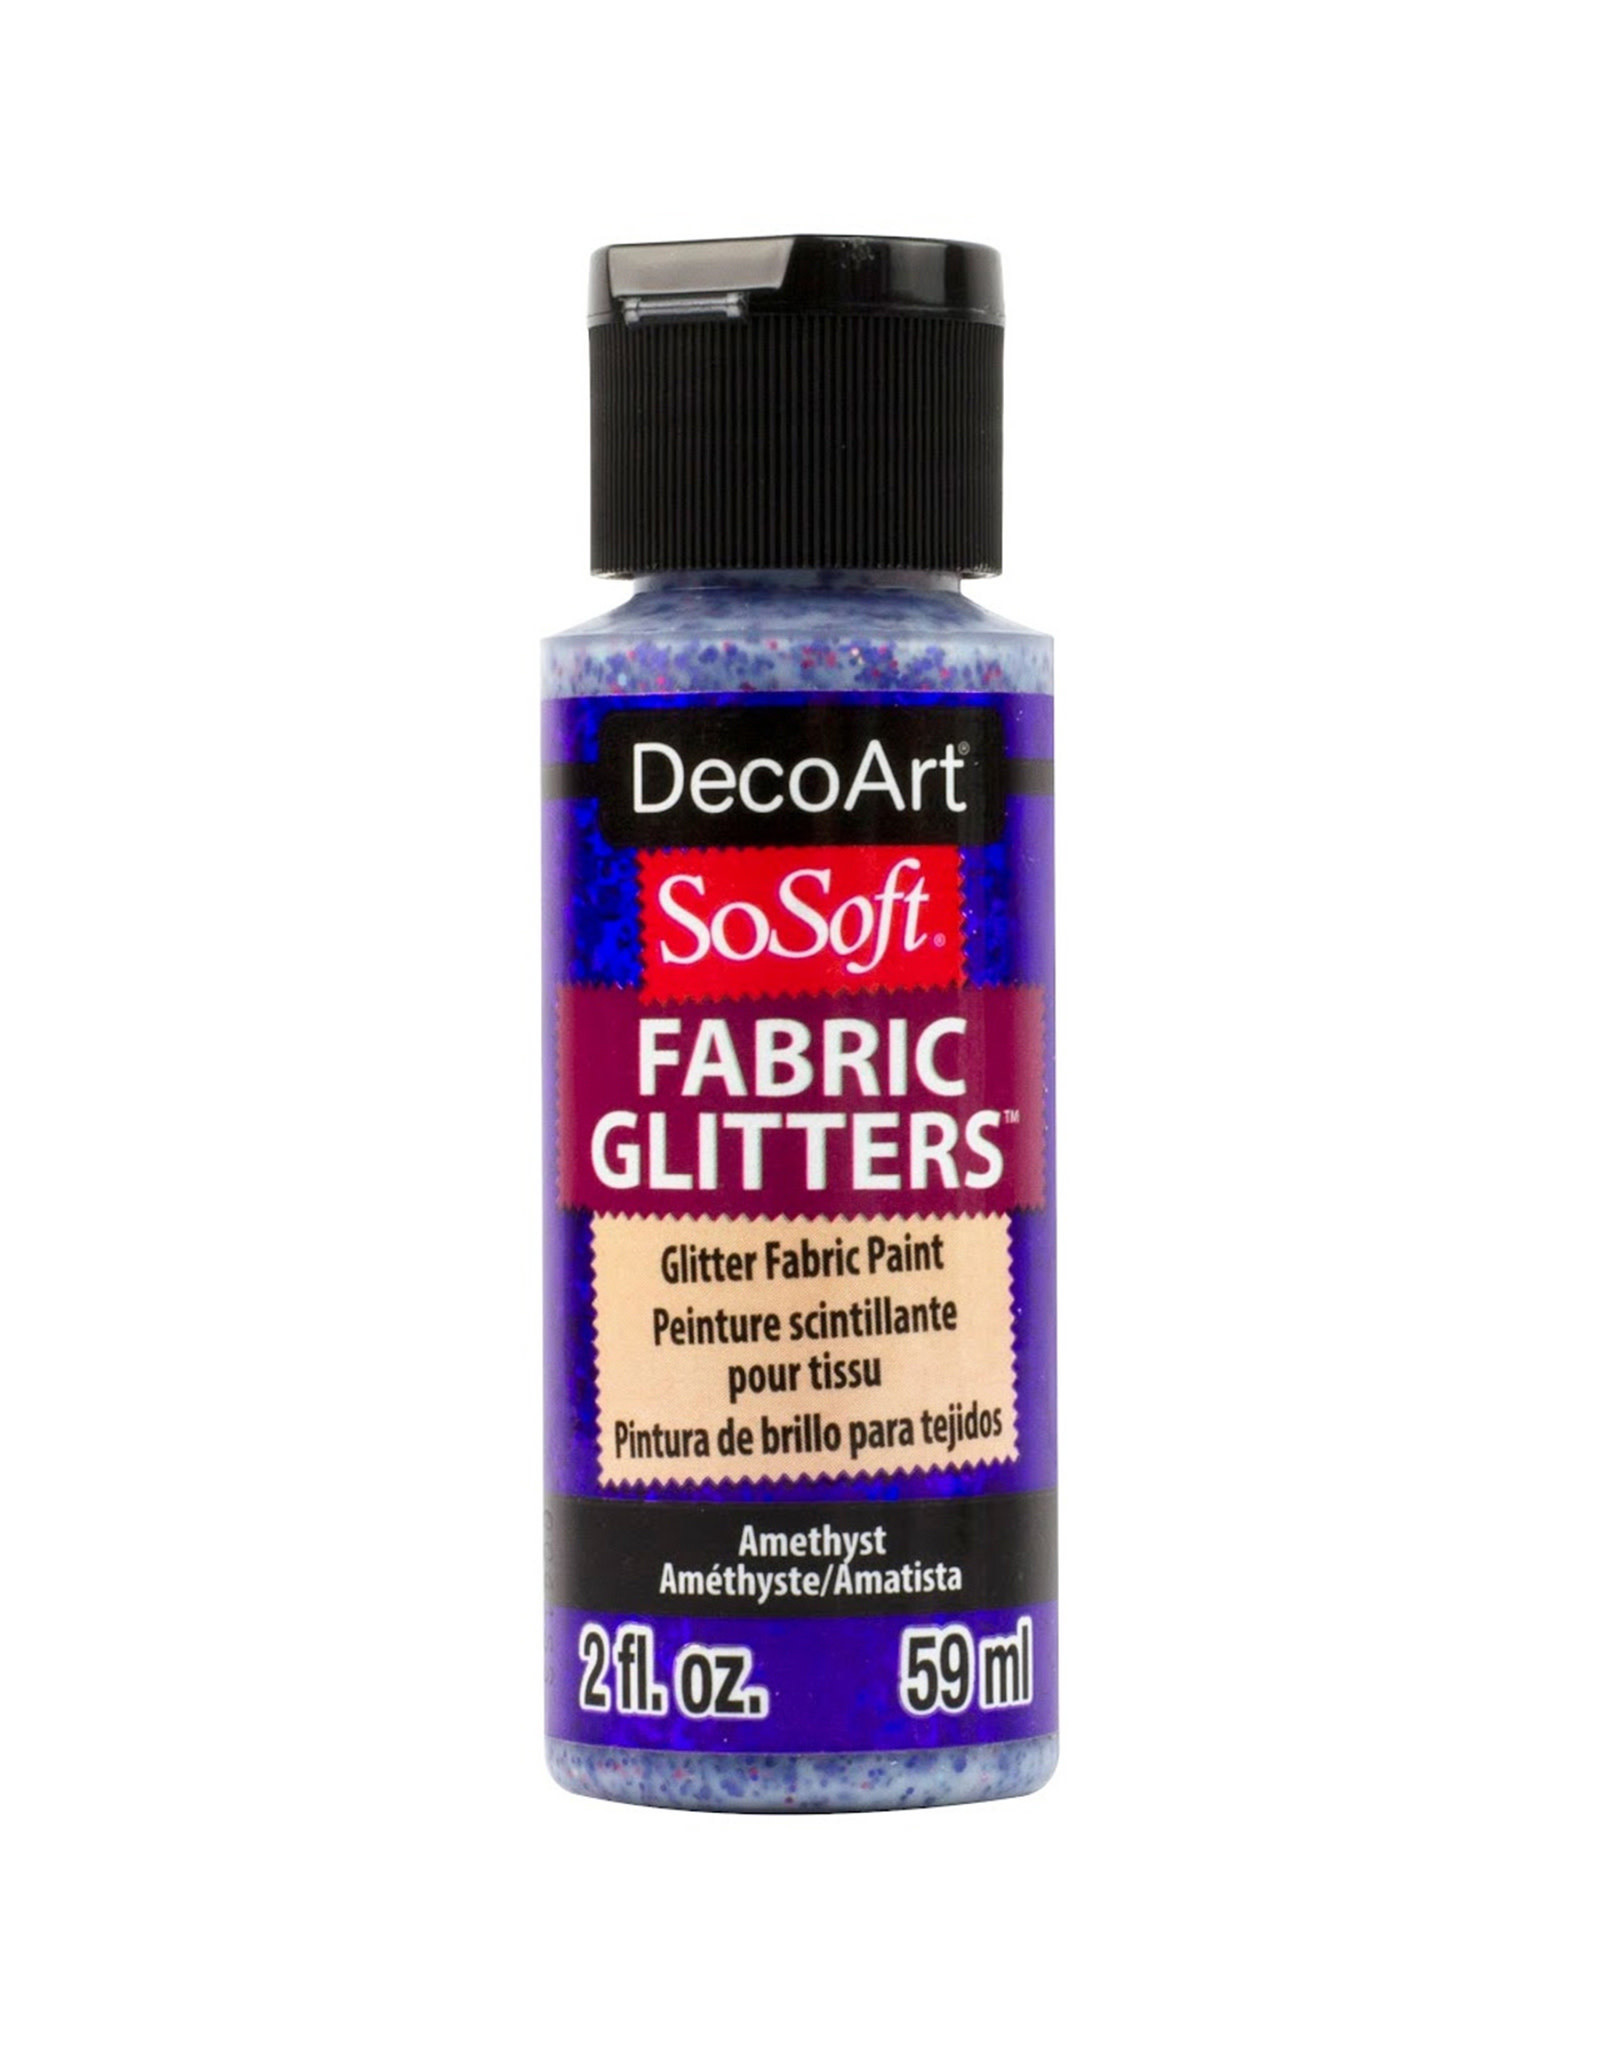 DecoArt DecoArt SoSoft Fabric Glitters, Amethyst 2oz